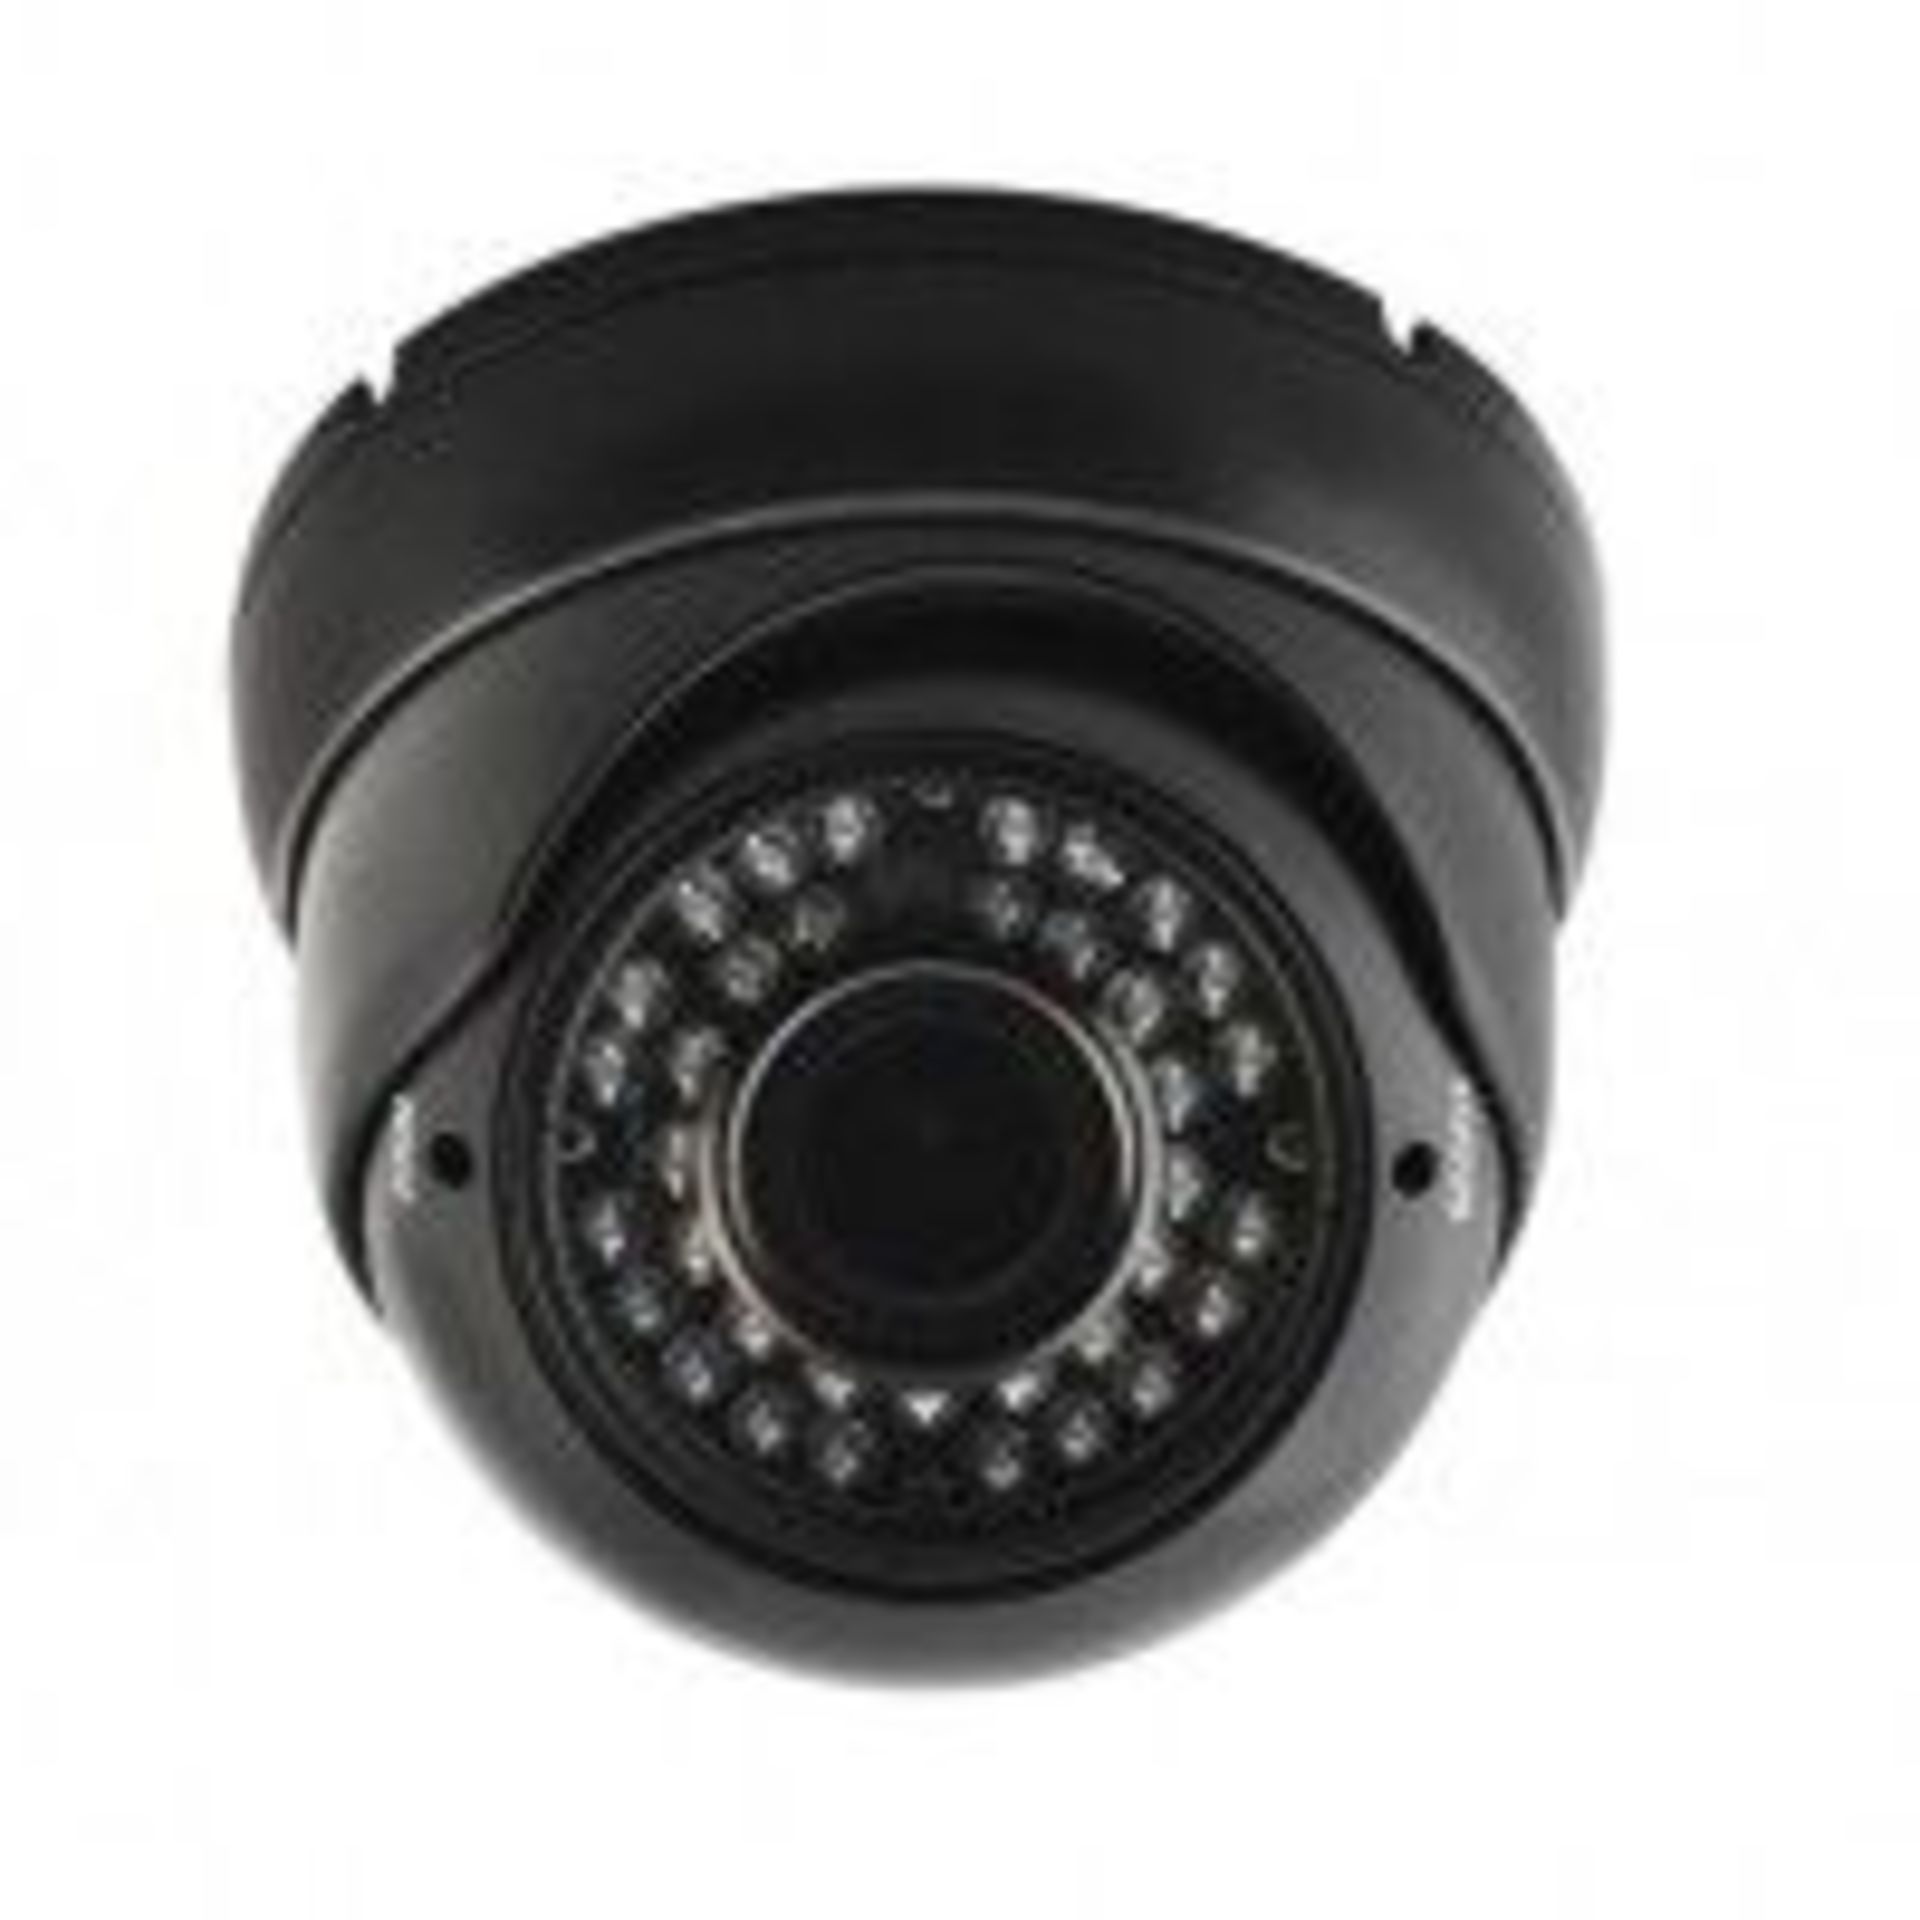 V *TRADE QTY* Brand New Avtech Eyeball IR Dome Camera- 1/3" Sony CCD- IR Range 30m - IP65 - Black